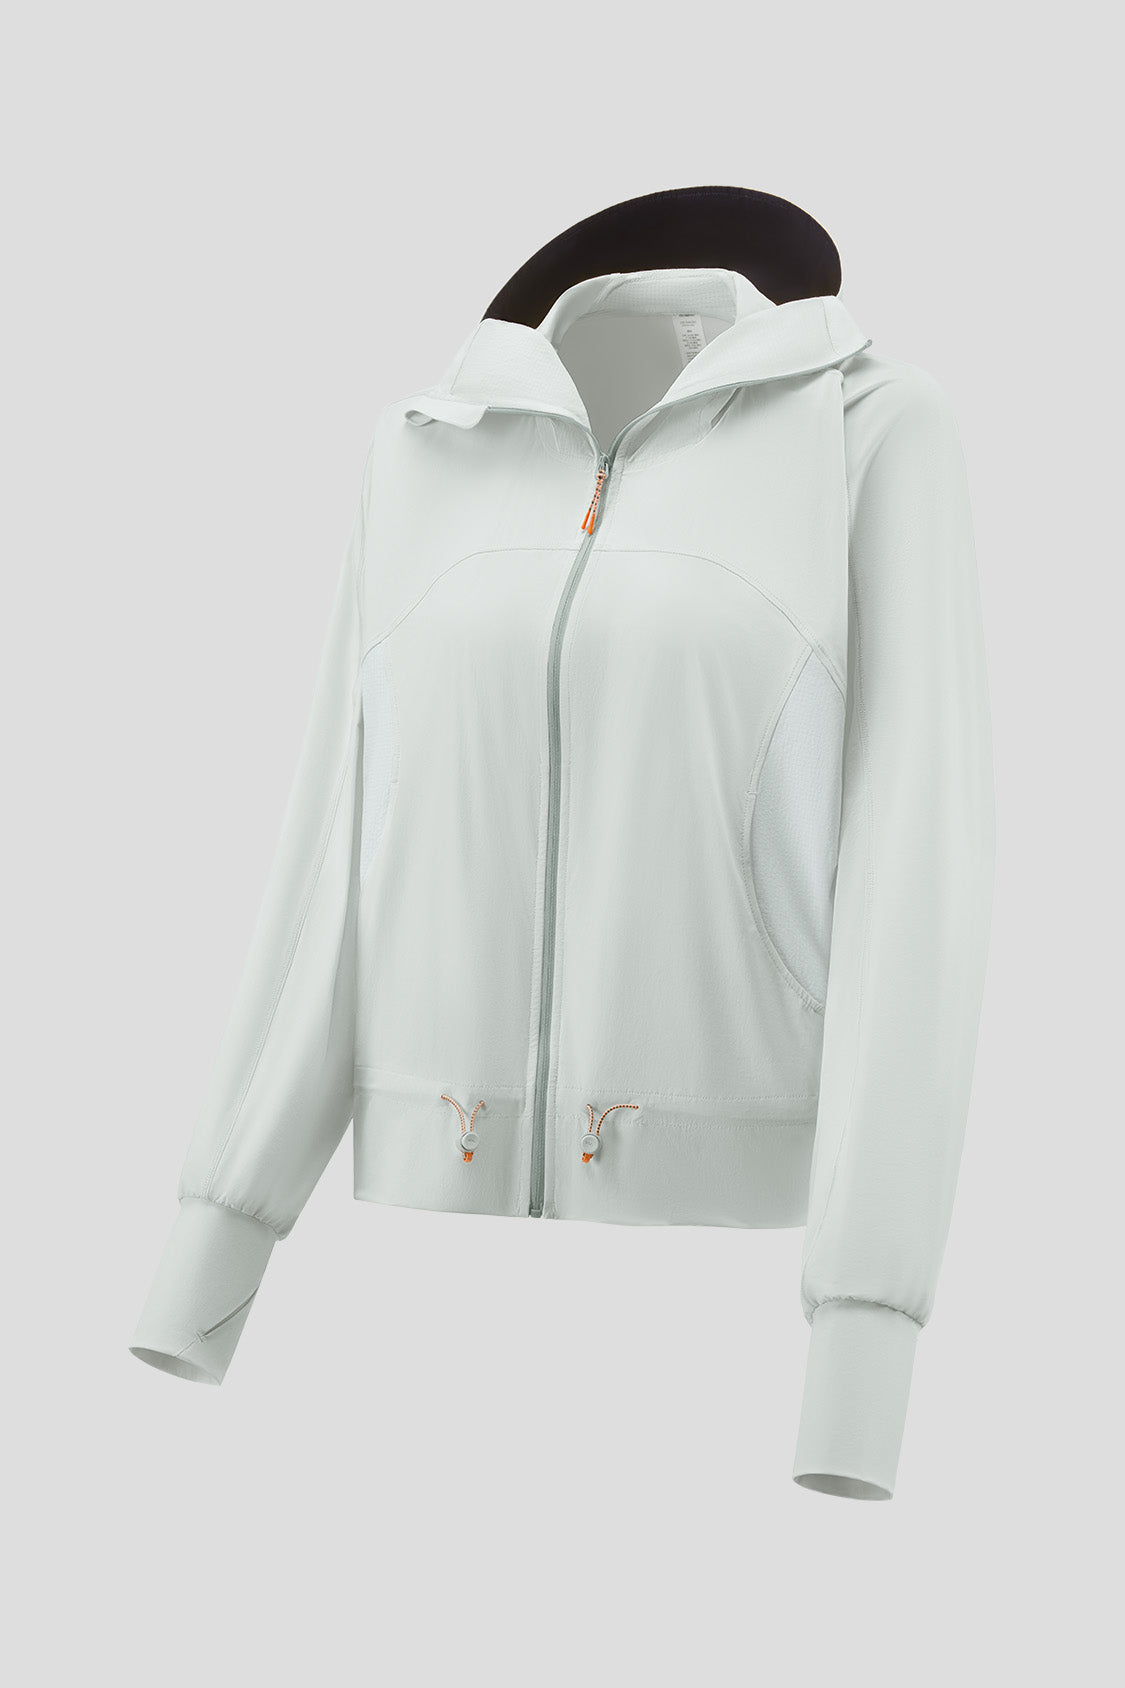 Beneunder Grey Full Zip Cropped UPF 50+ Athletic Jacket Women's Size M Size  M - $30 - From Taylor